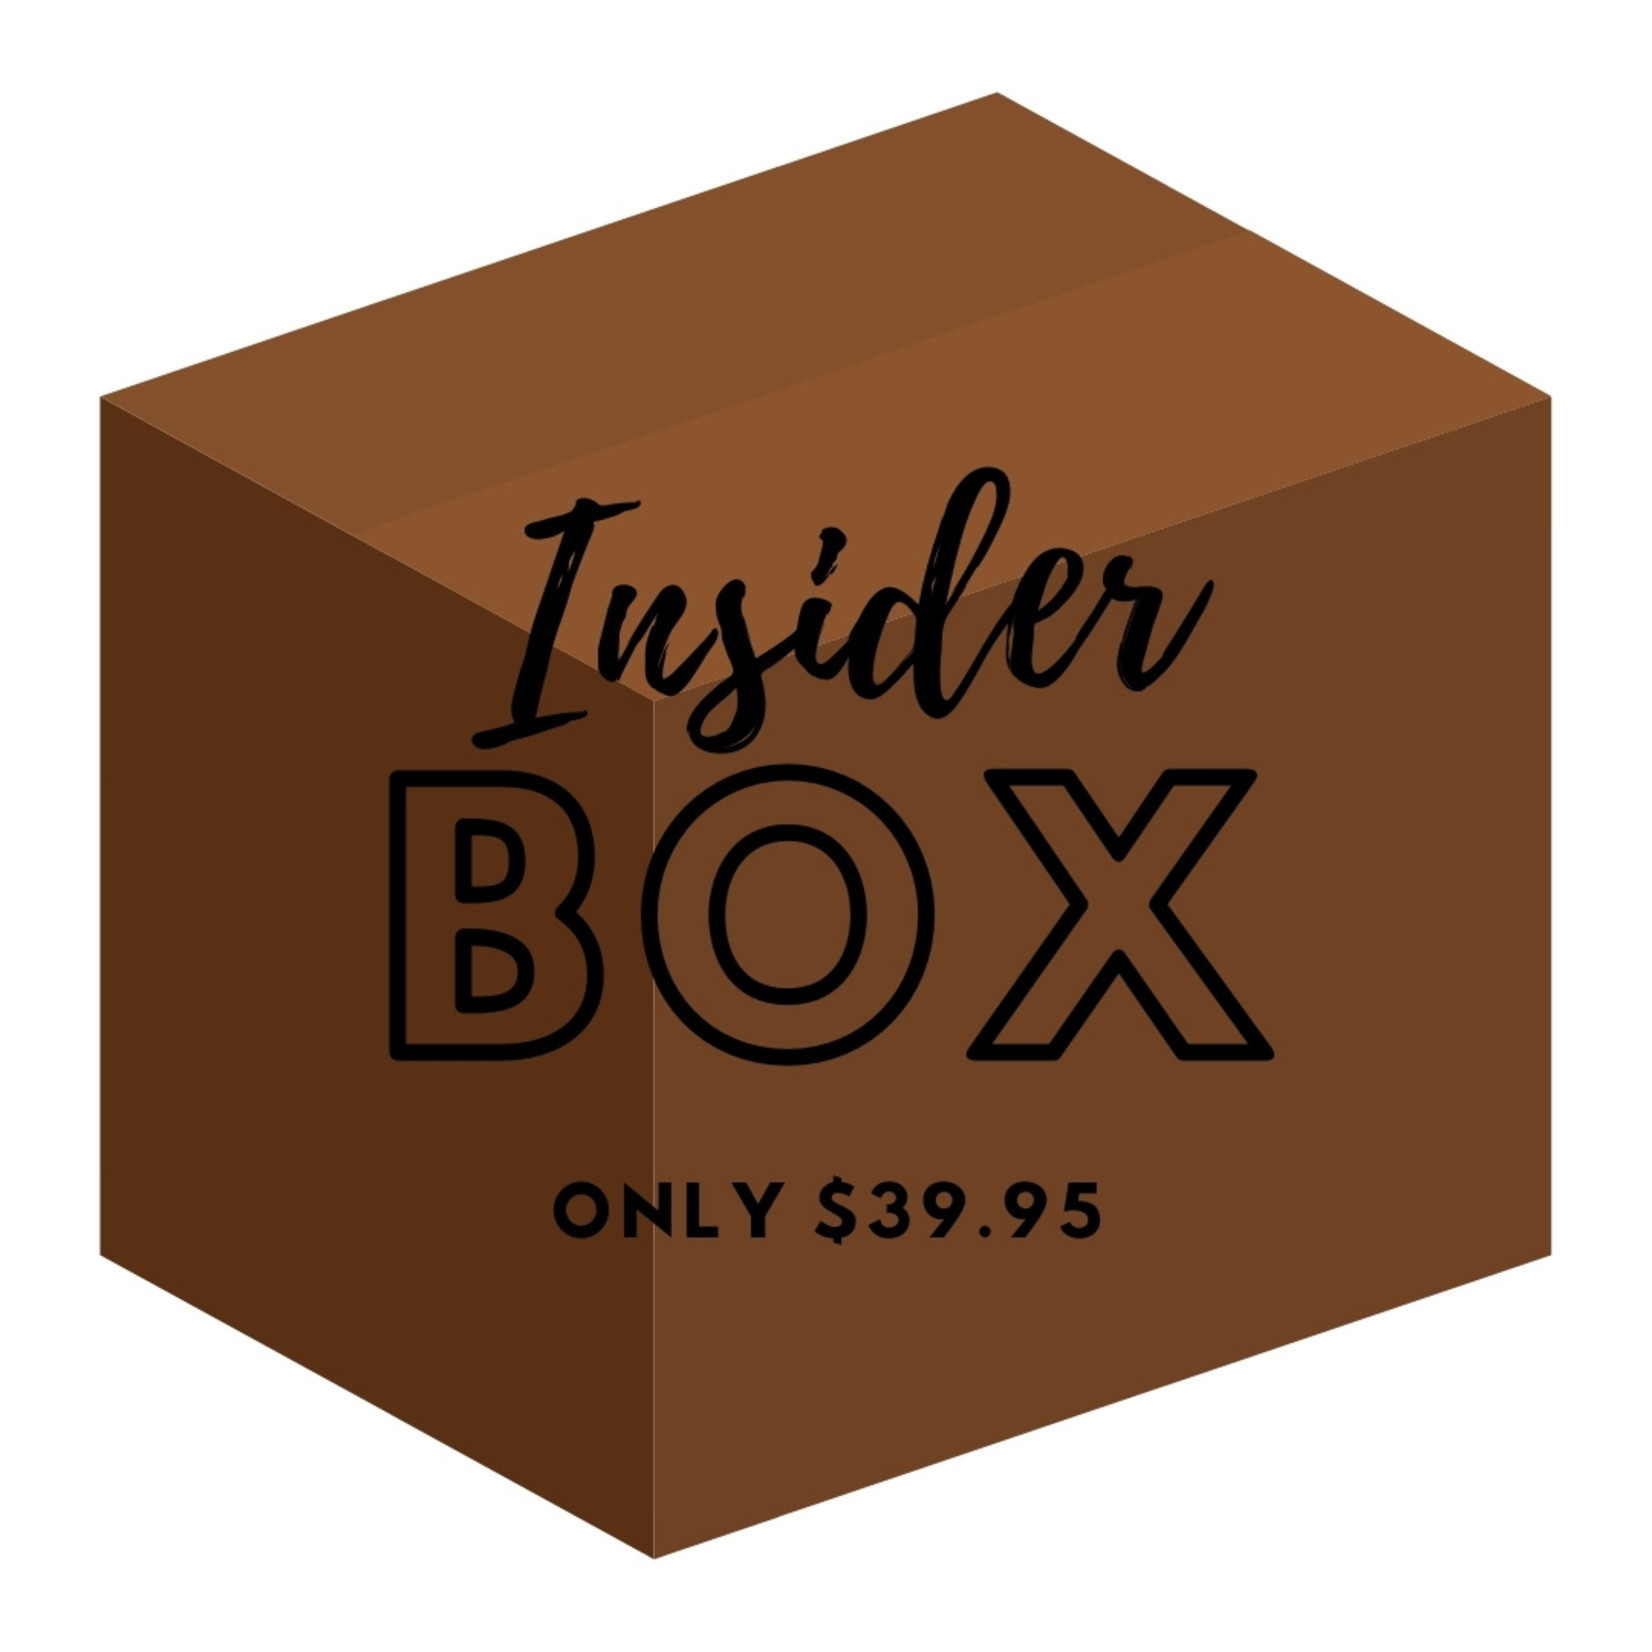 Insider Box